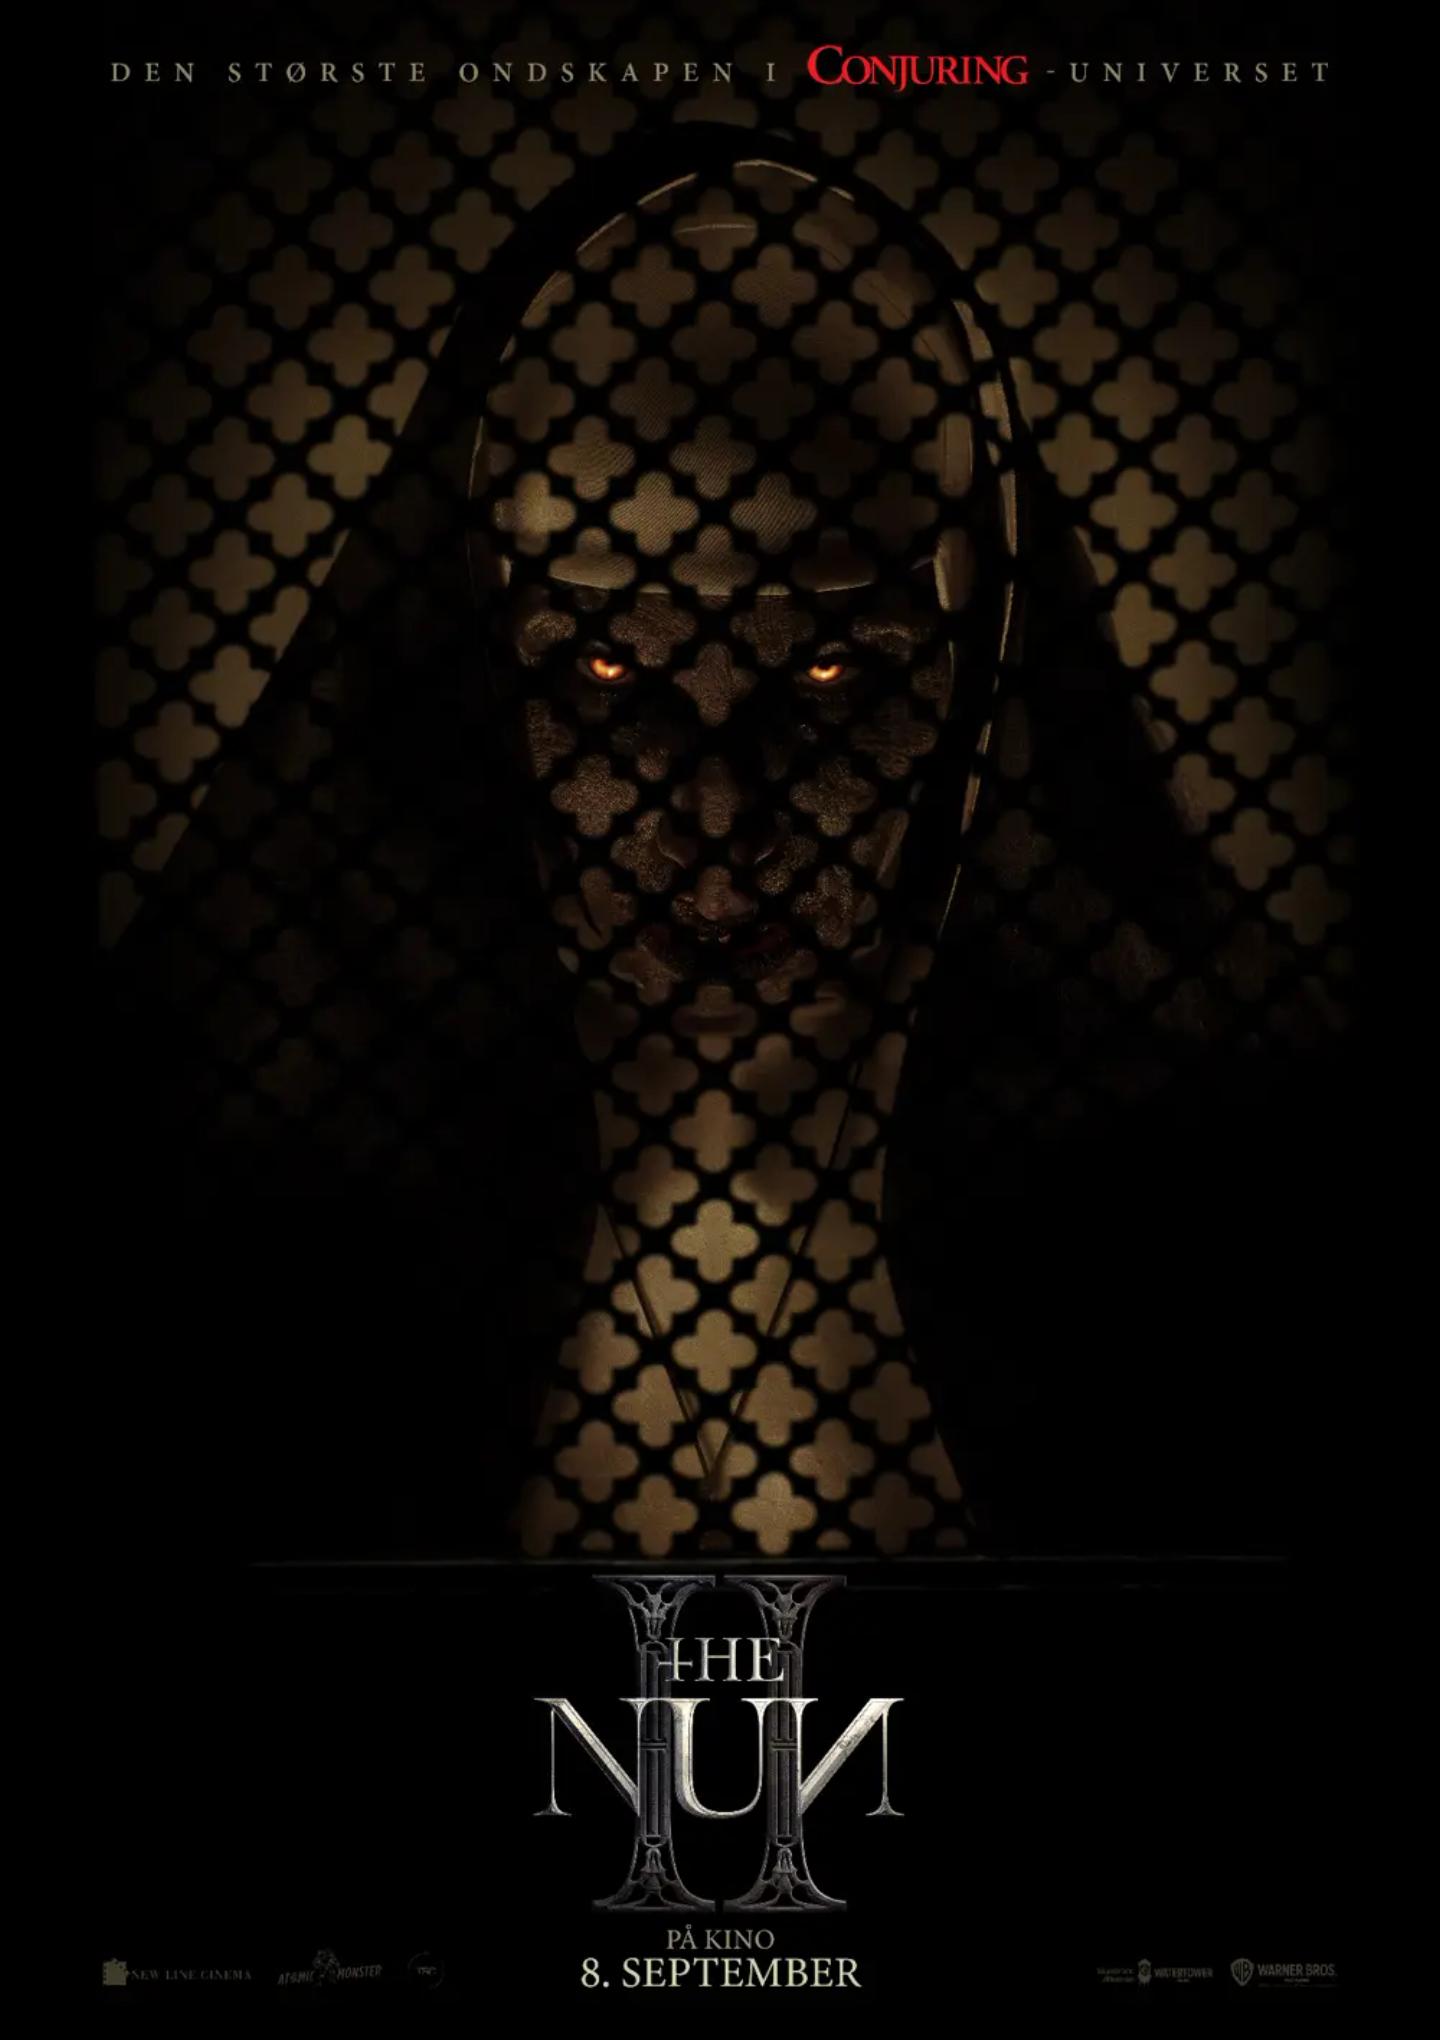 Plakat for 'The Nun 2'